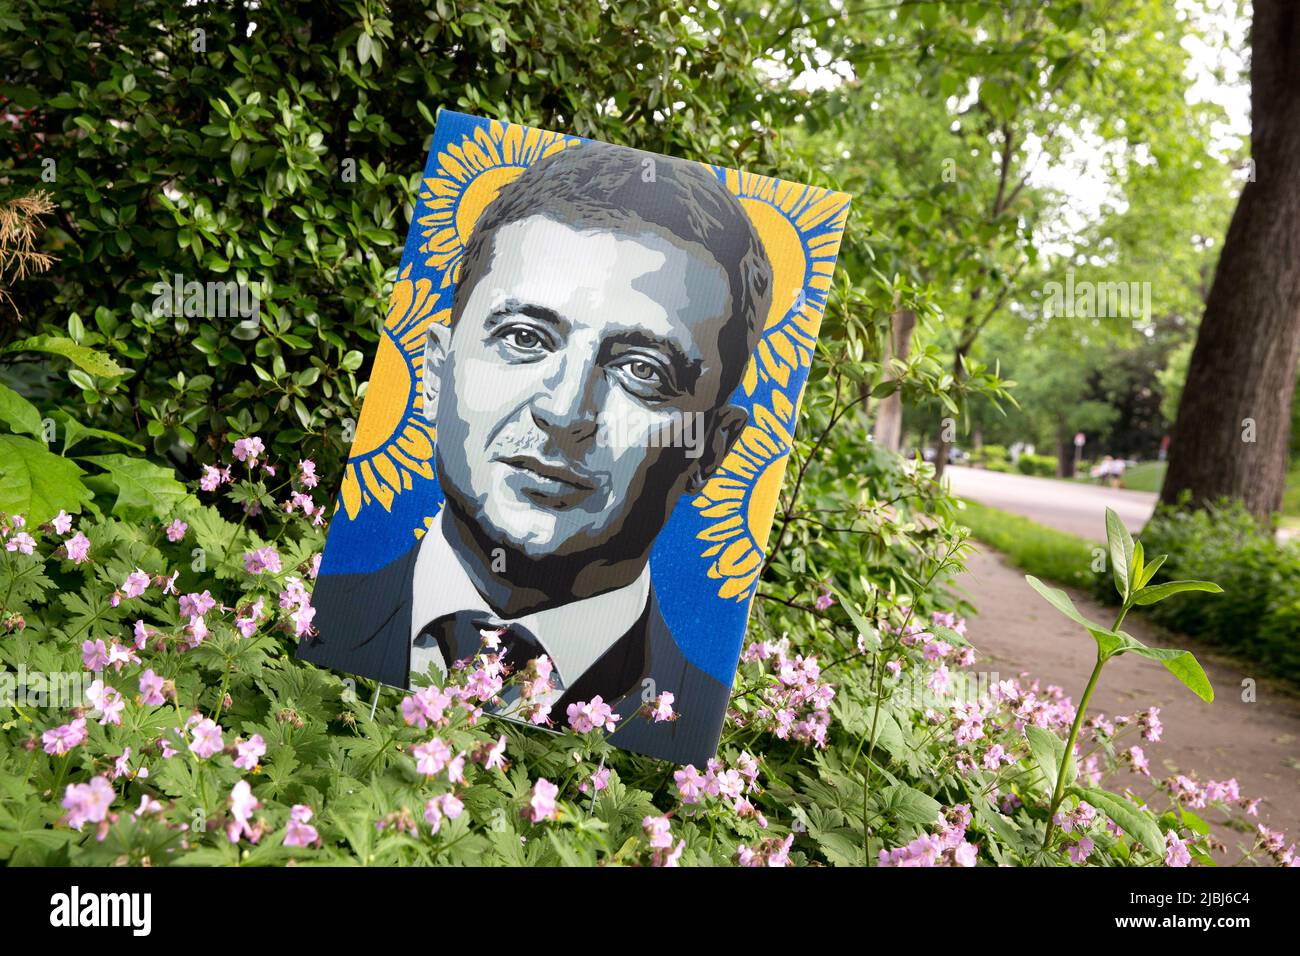 Colorful neighborhood yard sign in support and defense of Ukraine and Ukrainian President Volodymyr Zelenskyy in Minneapolis, Minnesota, USA Stock Photo